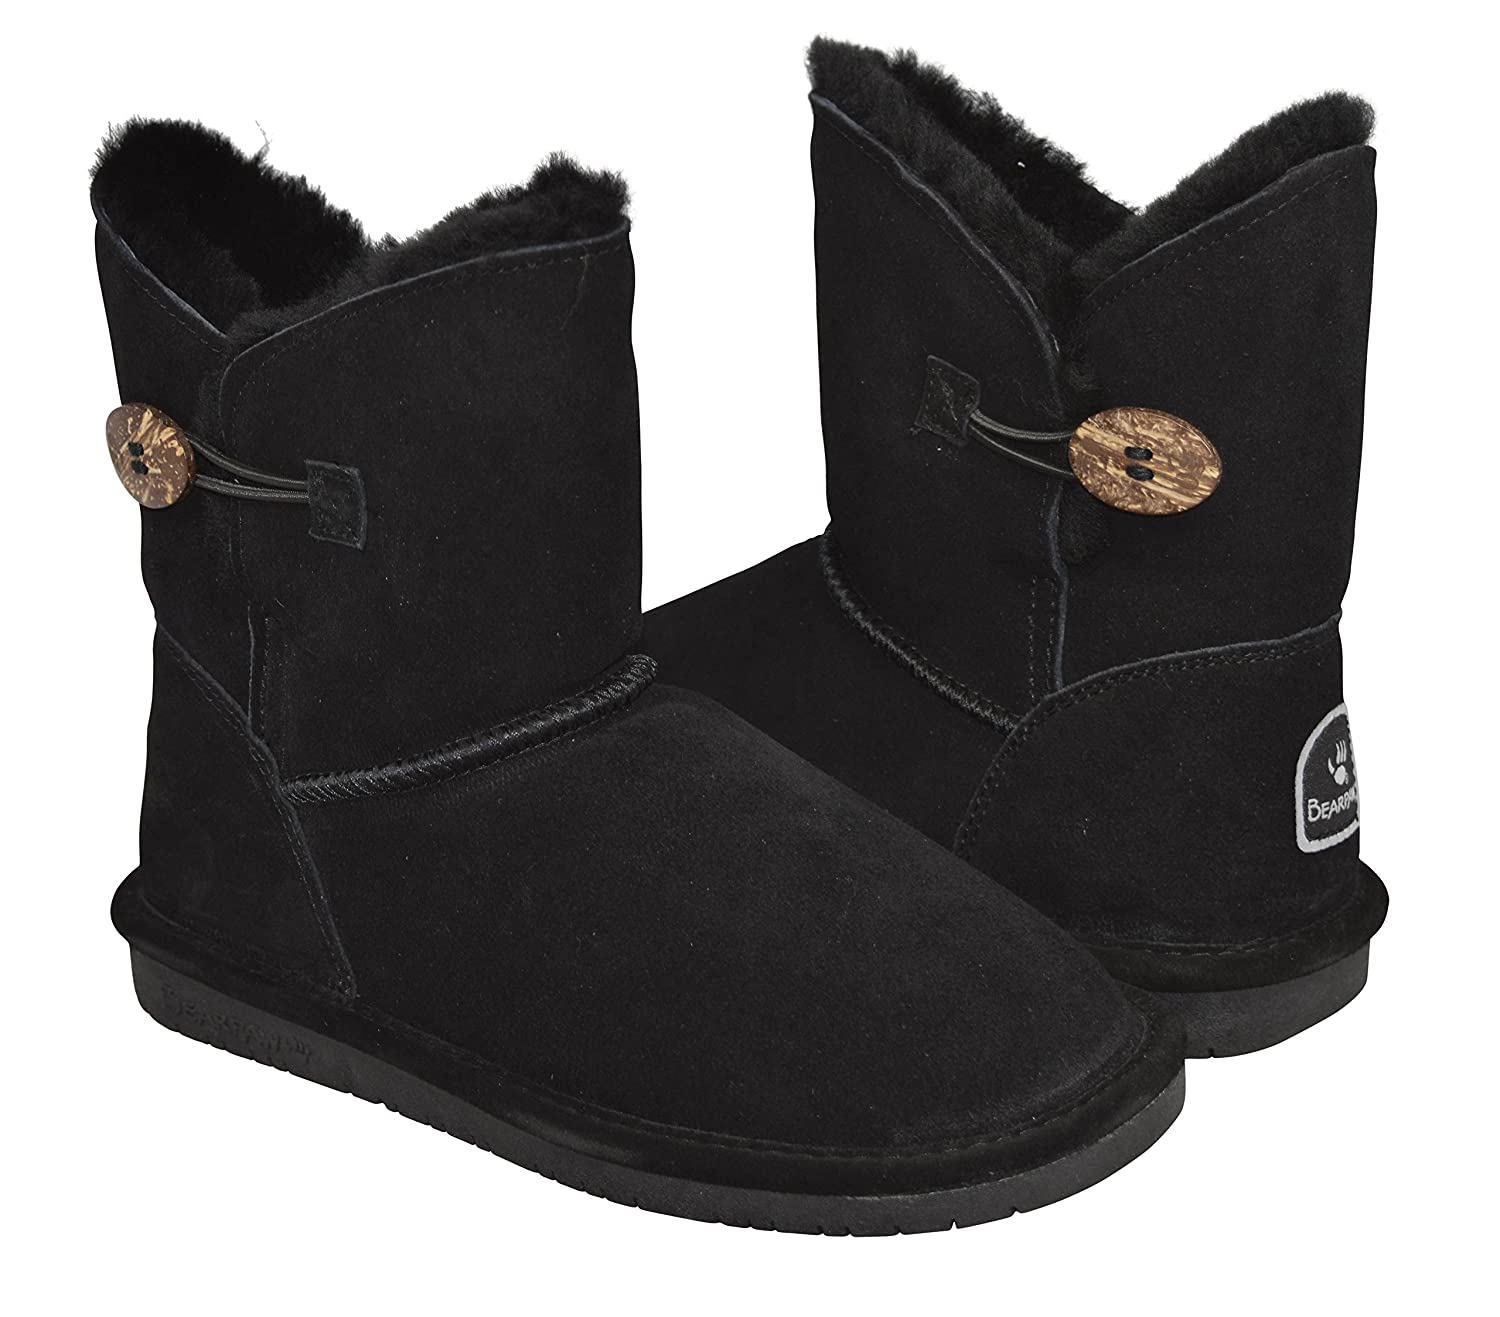 Bearpaw Roise Ladies Black Boots 9 | eBay